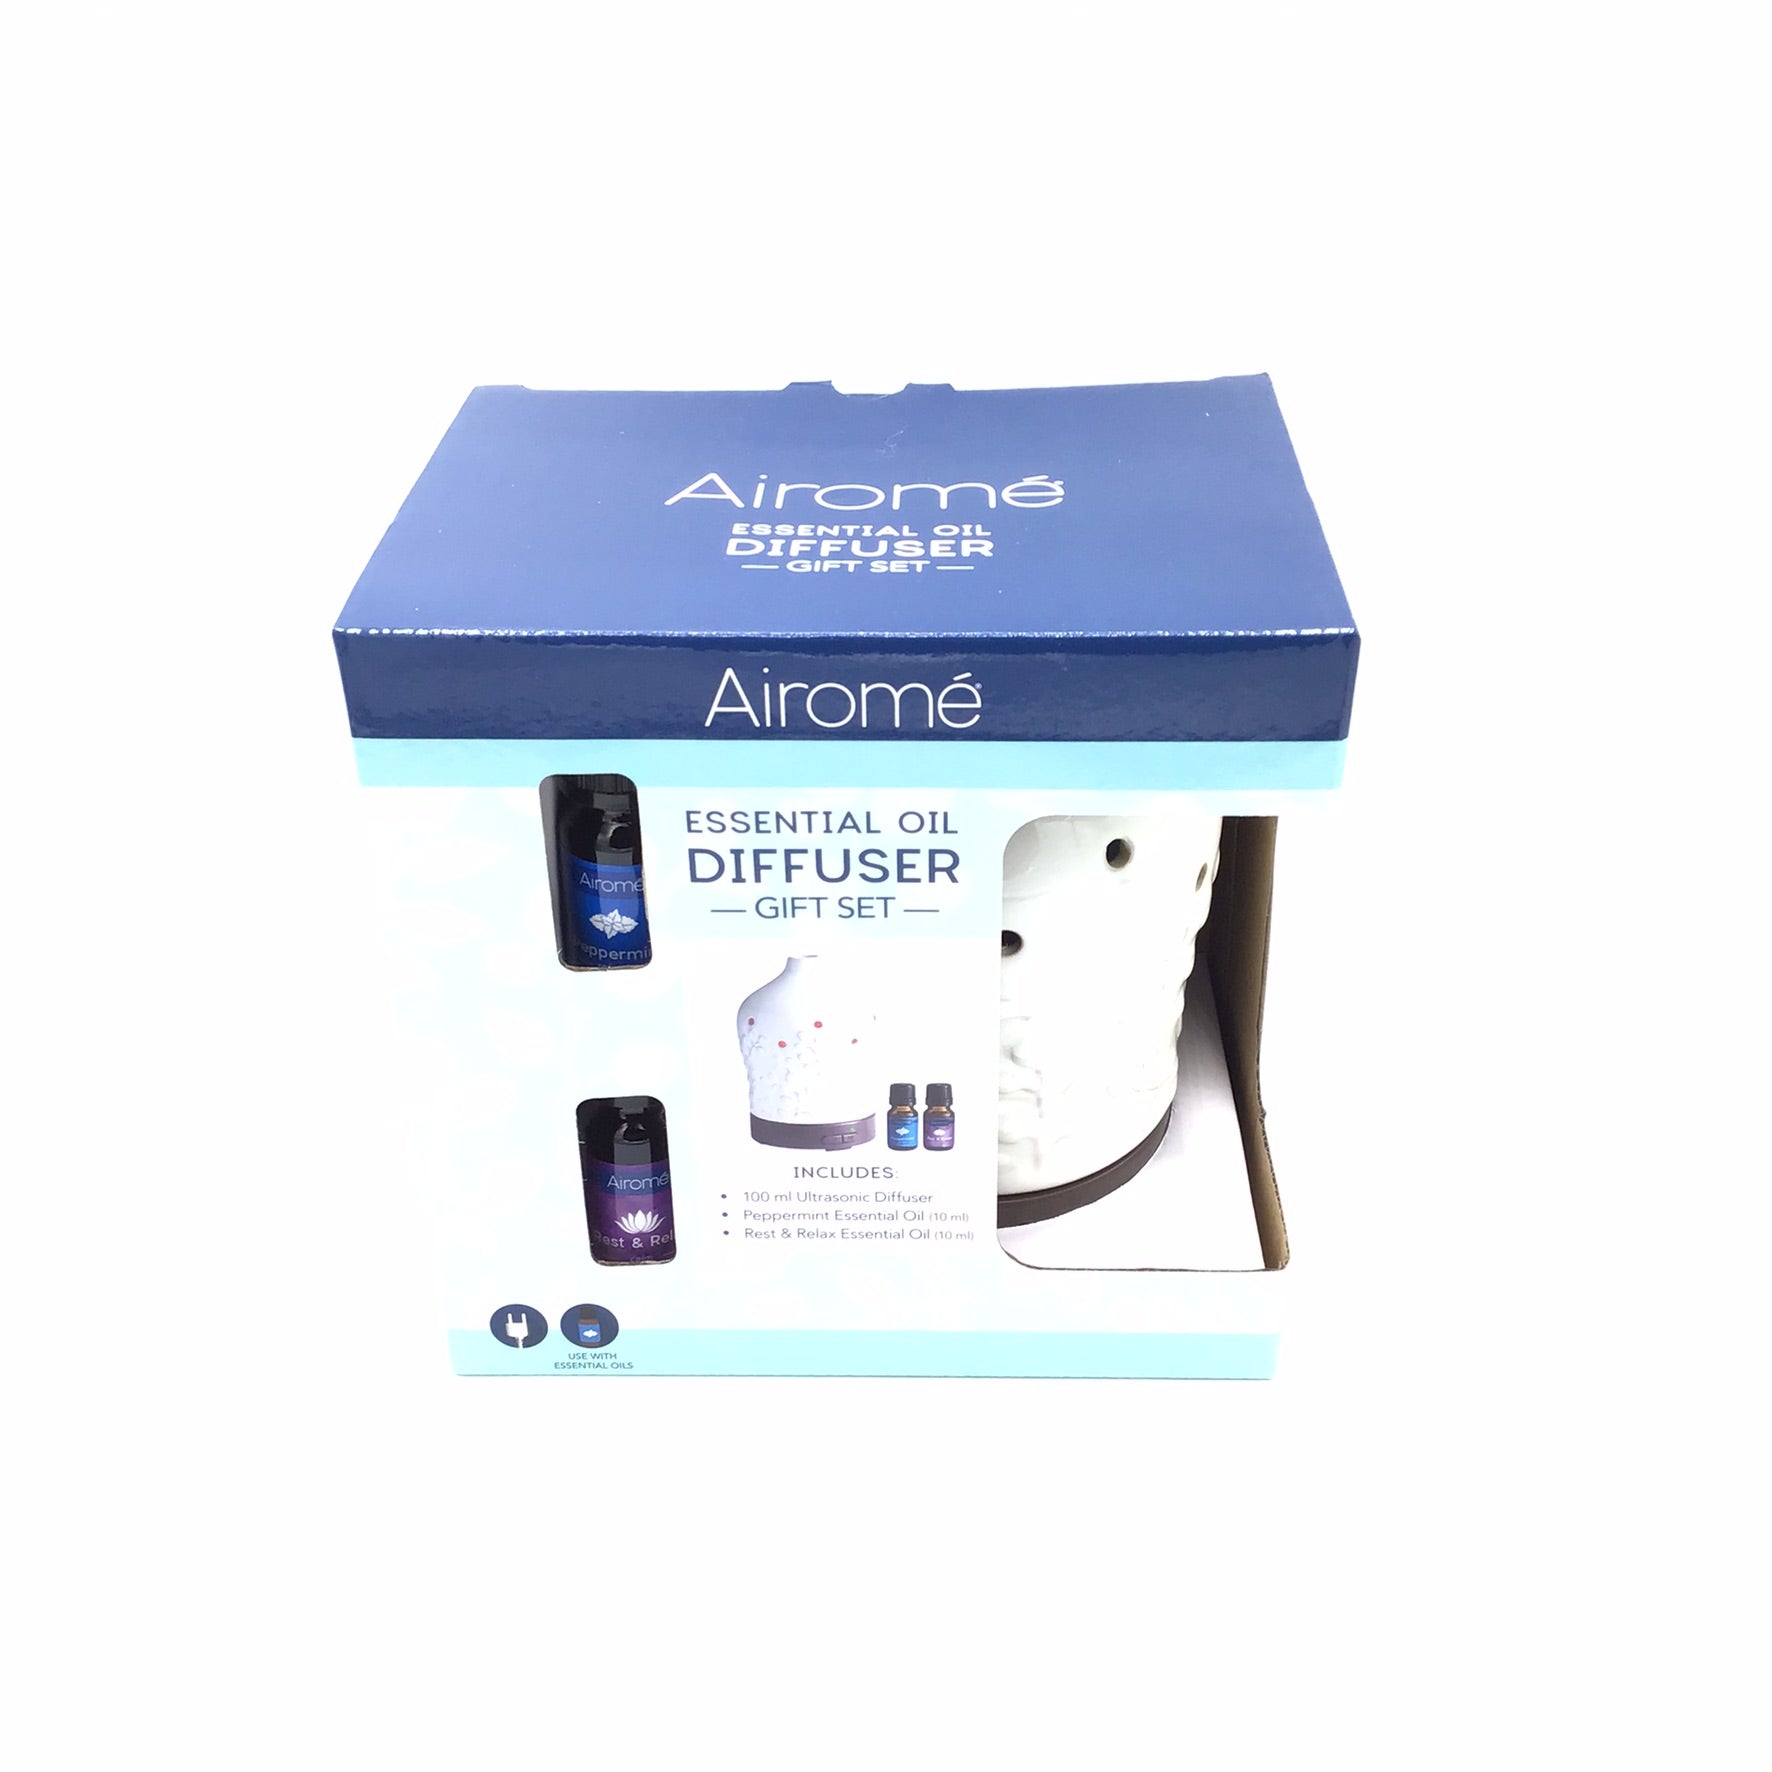 Airome Essential Oil Diffuser Gift Set